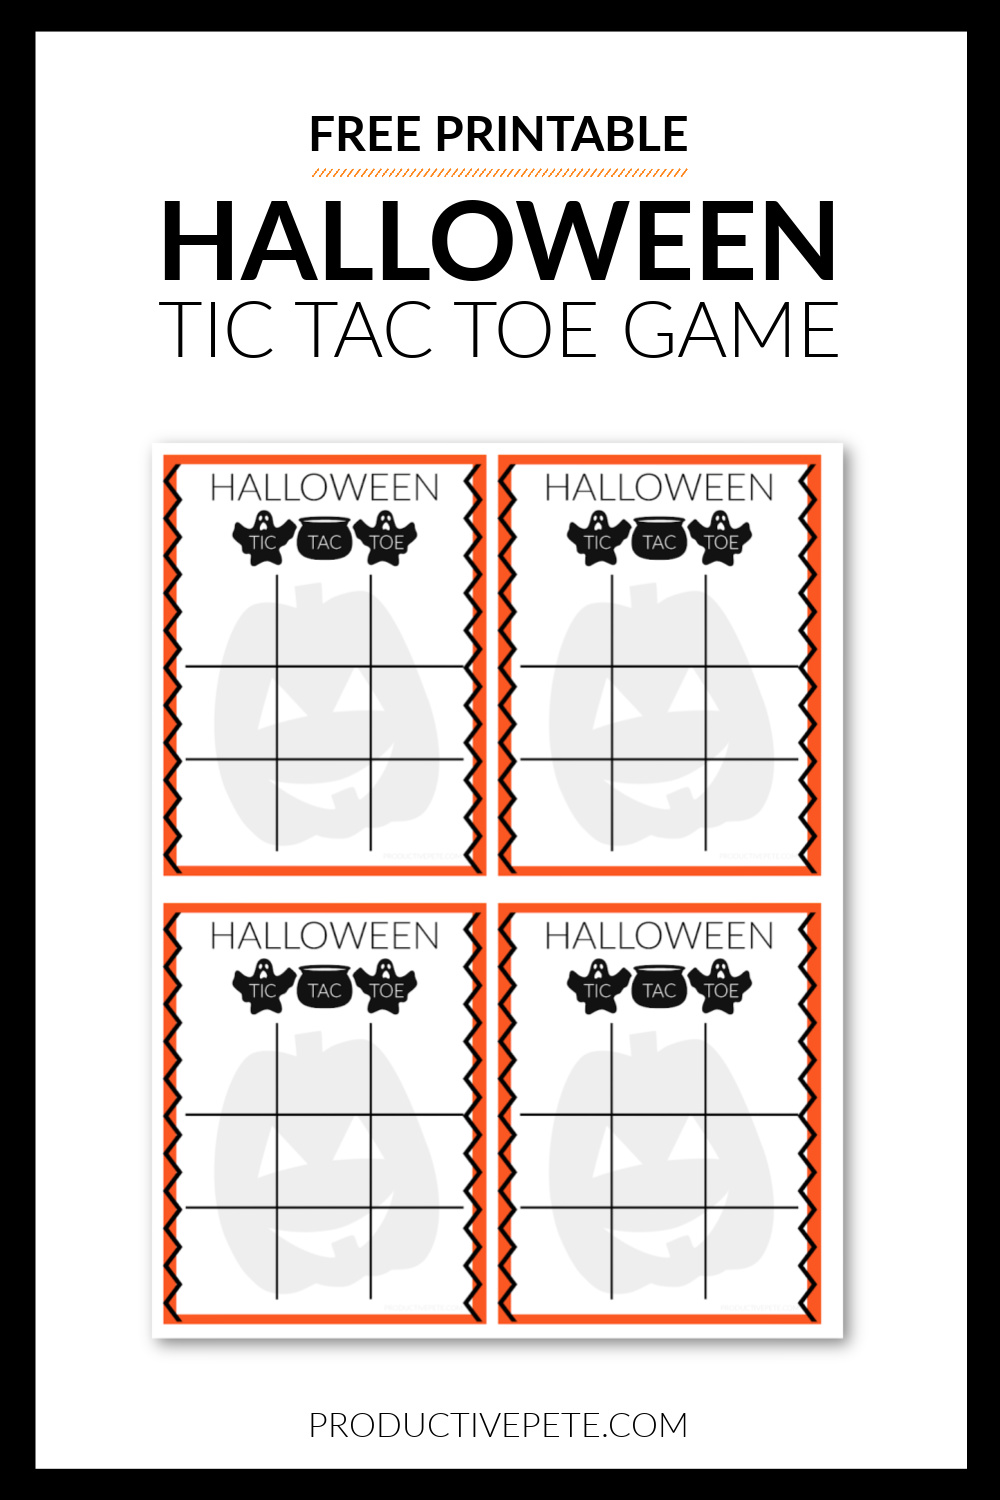 free-printable-halloween-tic-tac-toe-game-for-kids-productive-pete